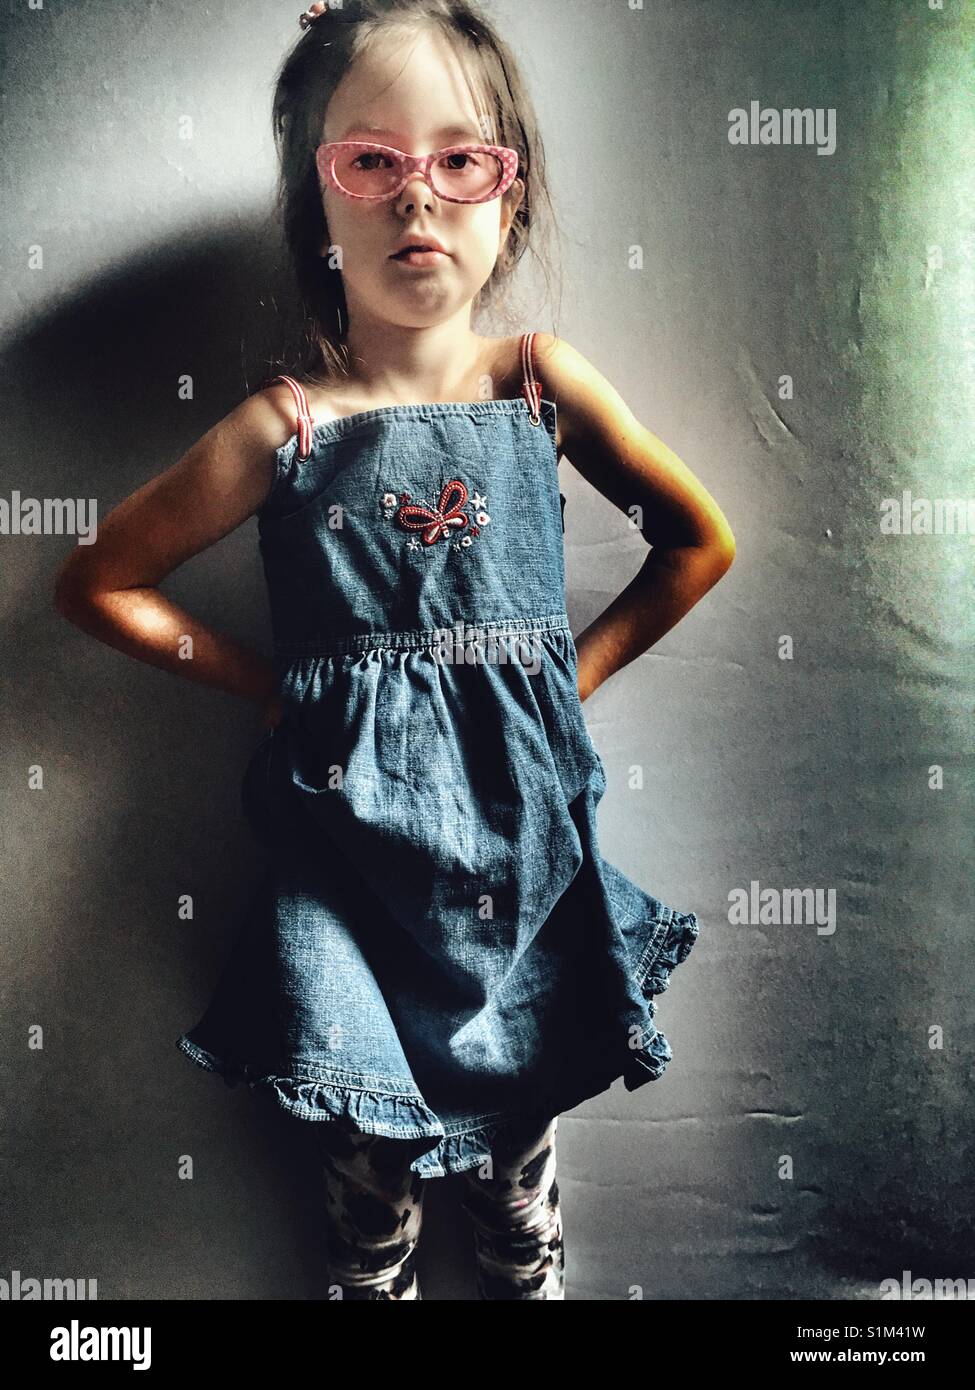 Girl wearing denim dress and leggings Stock Photo